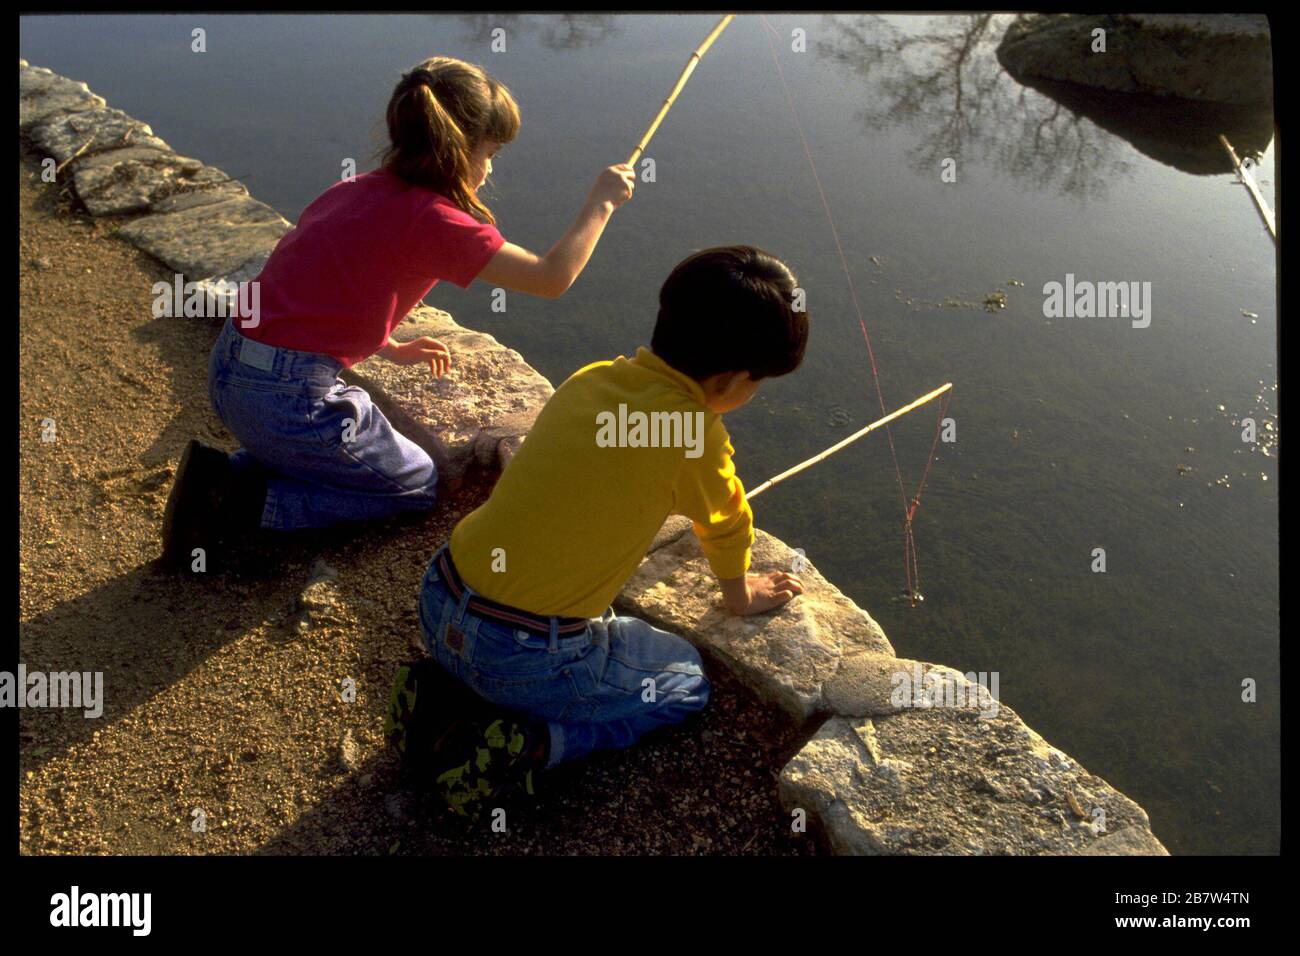 Austin Texas USA: Six-year-old boy and girl fishing in Barton Creek with bamboo fishing poles.   MR   ©Bob Daemmrich Stock Photo